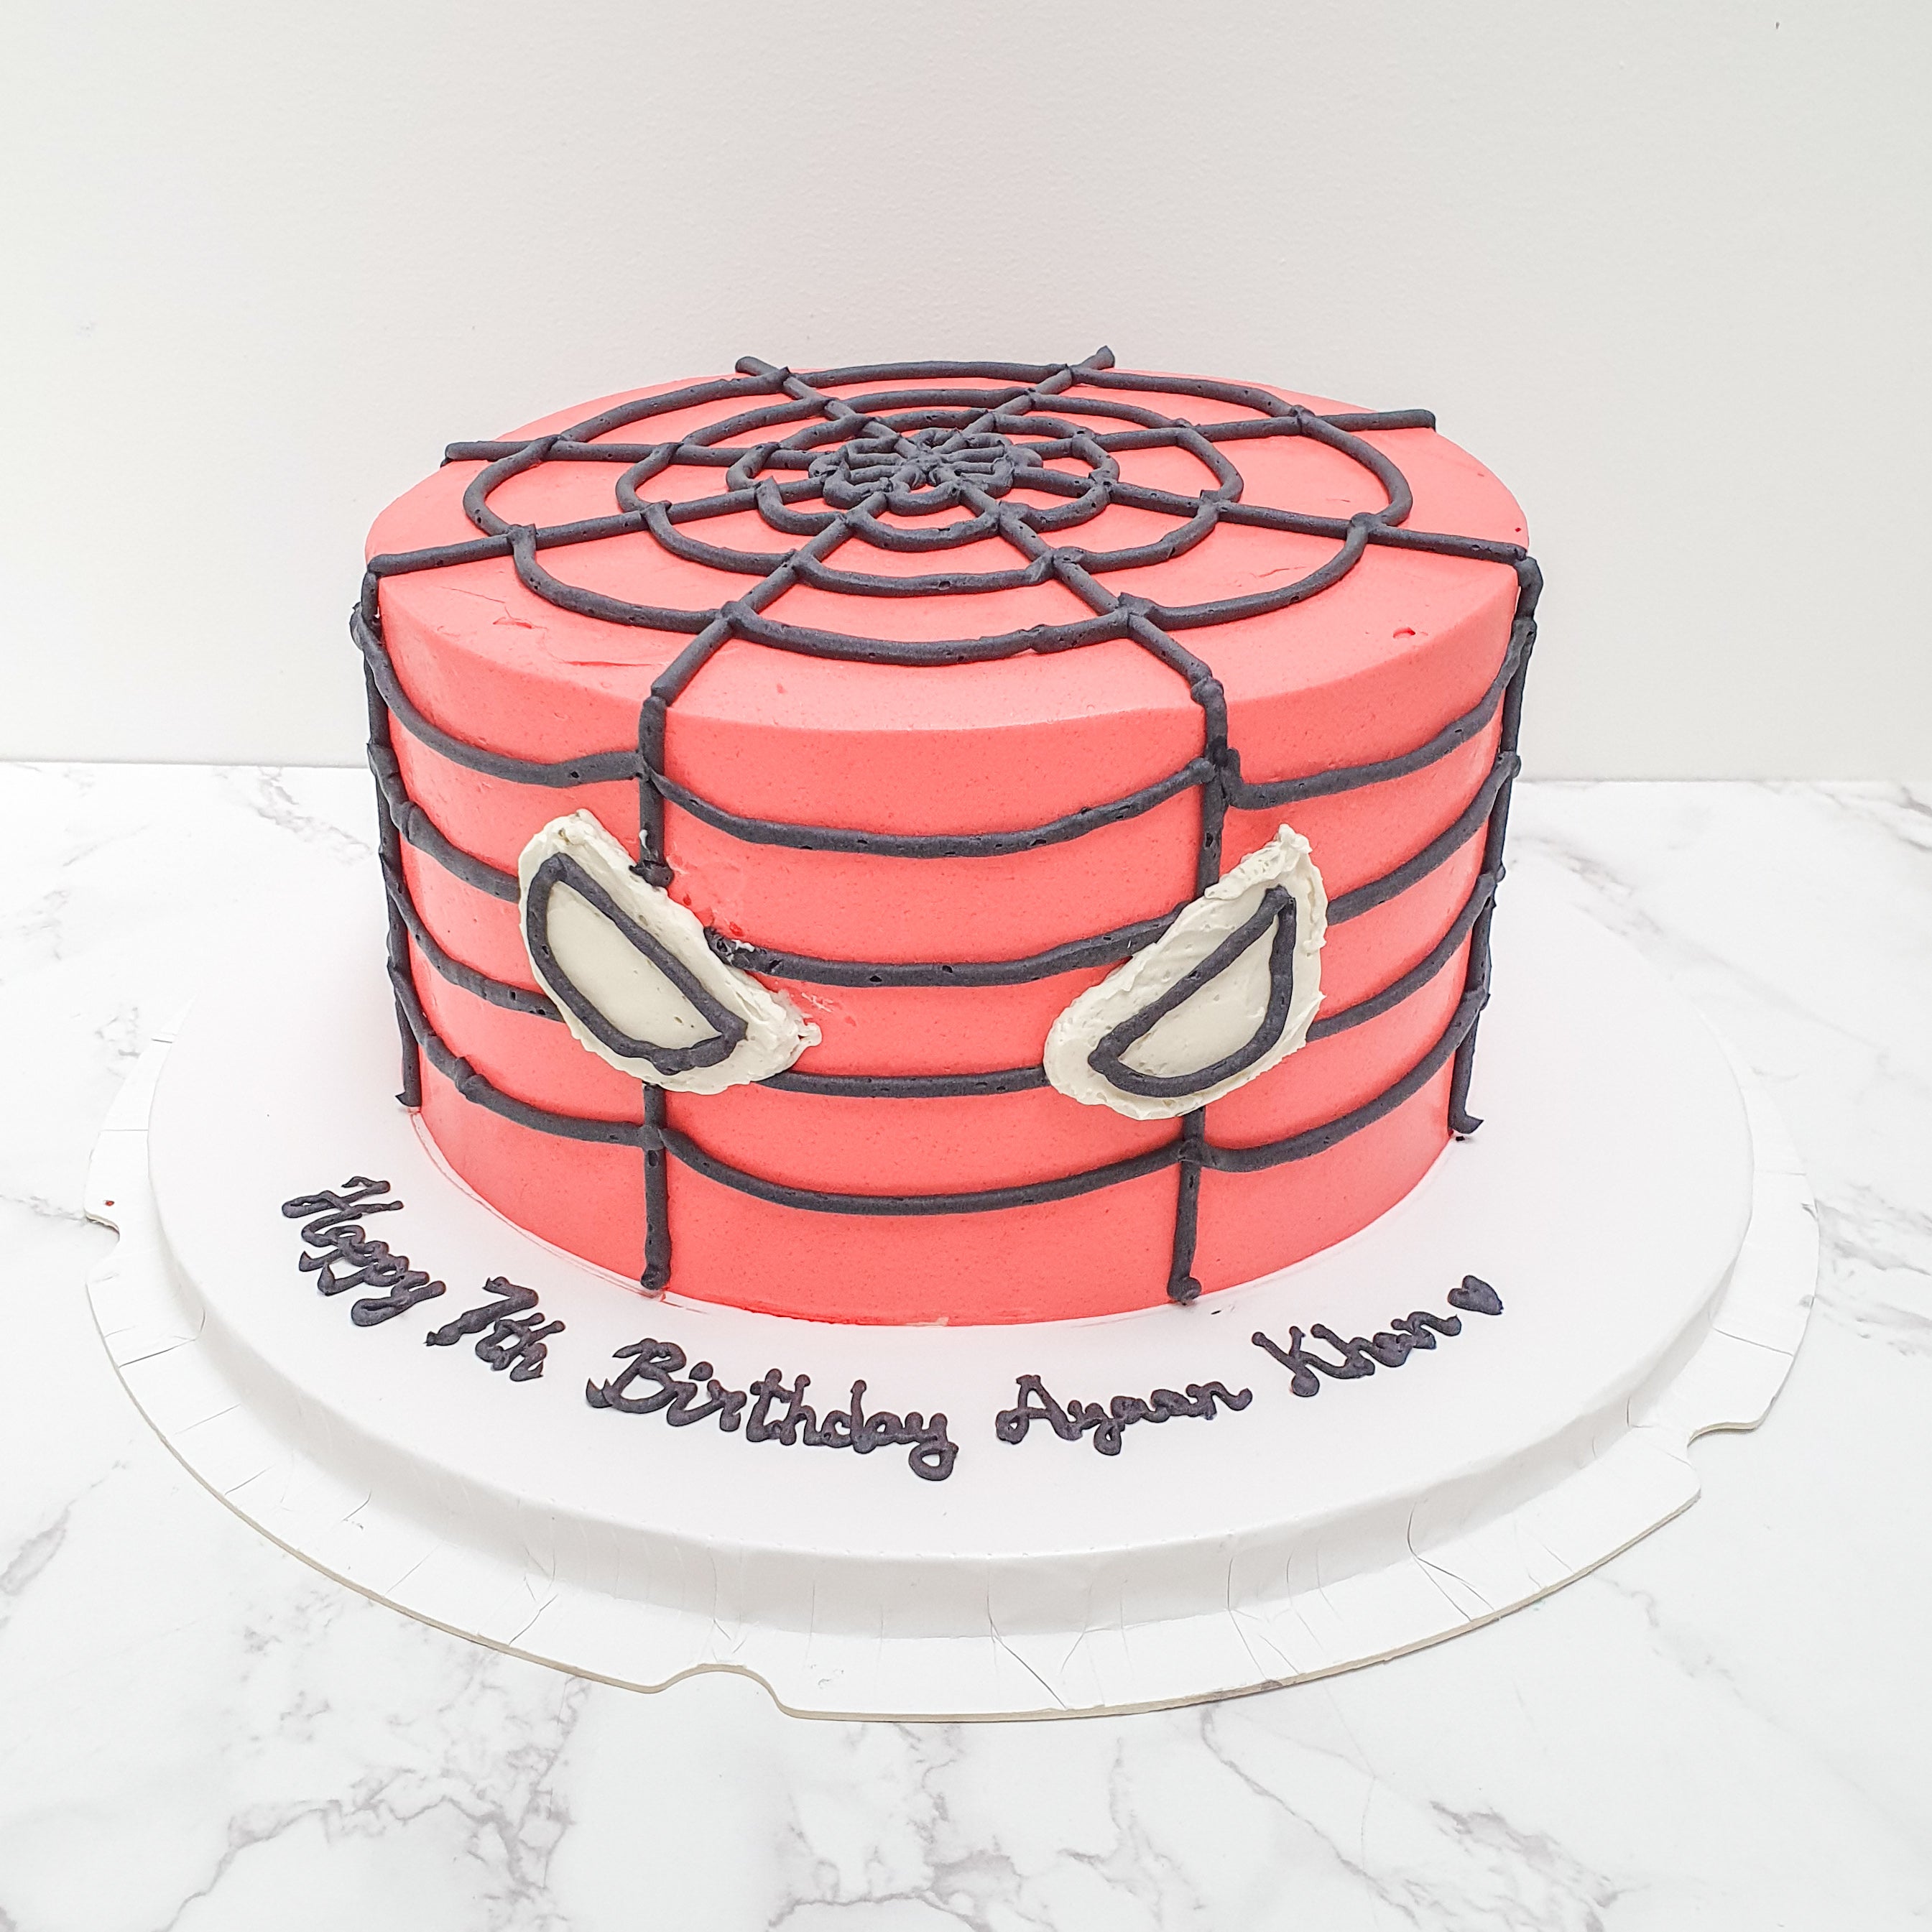 Spider's web cake recipe | BBC Good Food